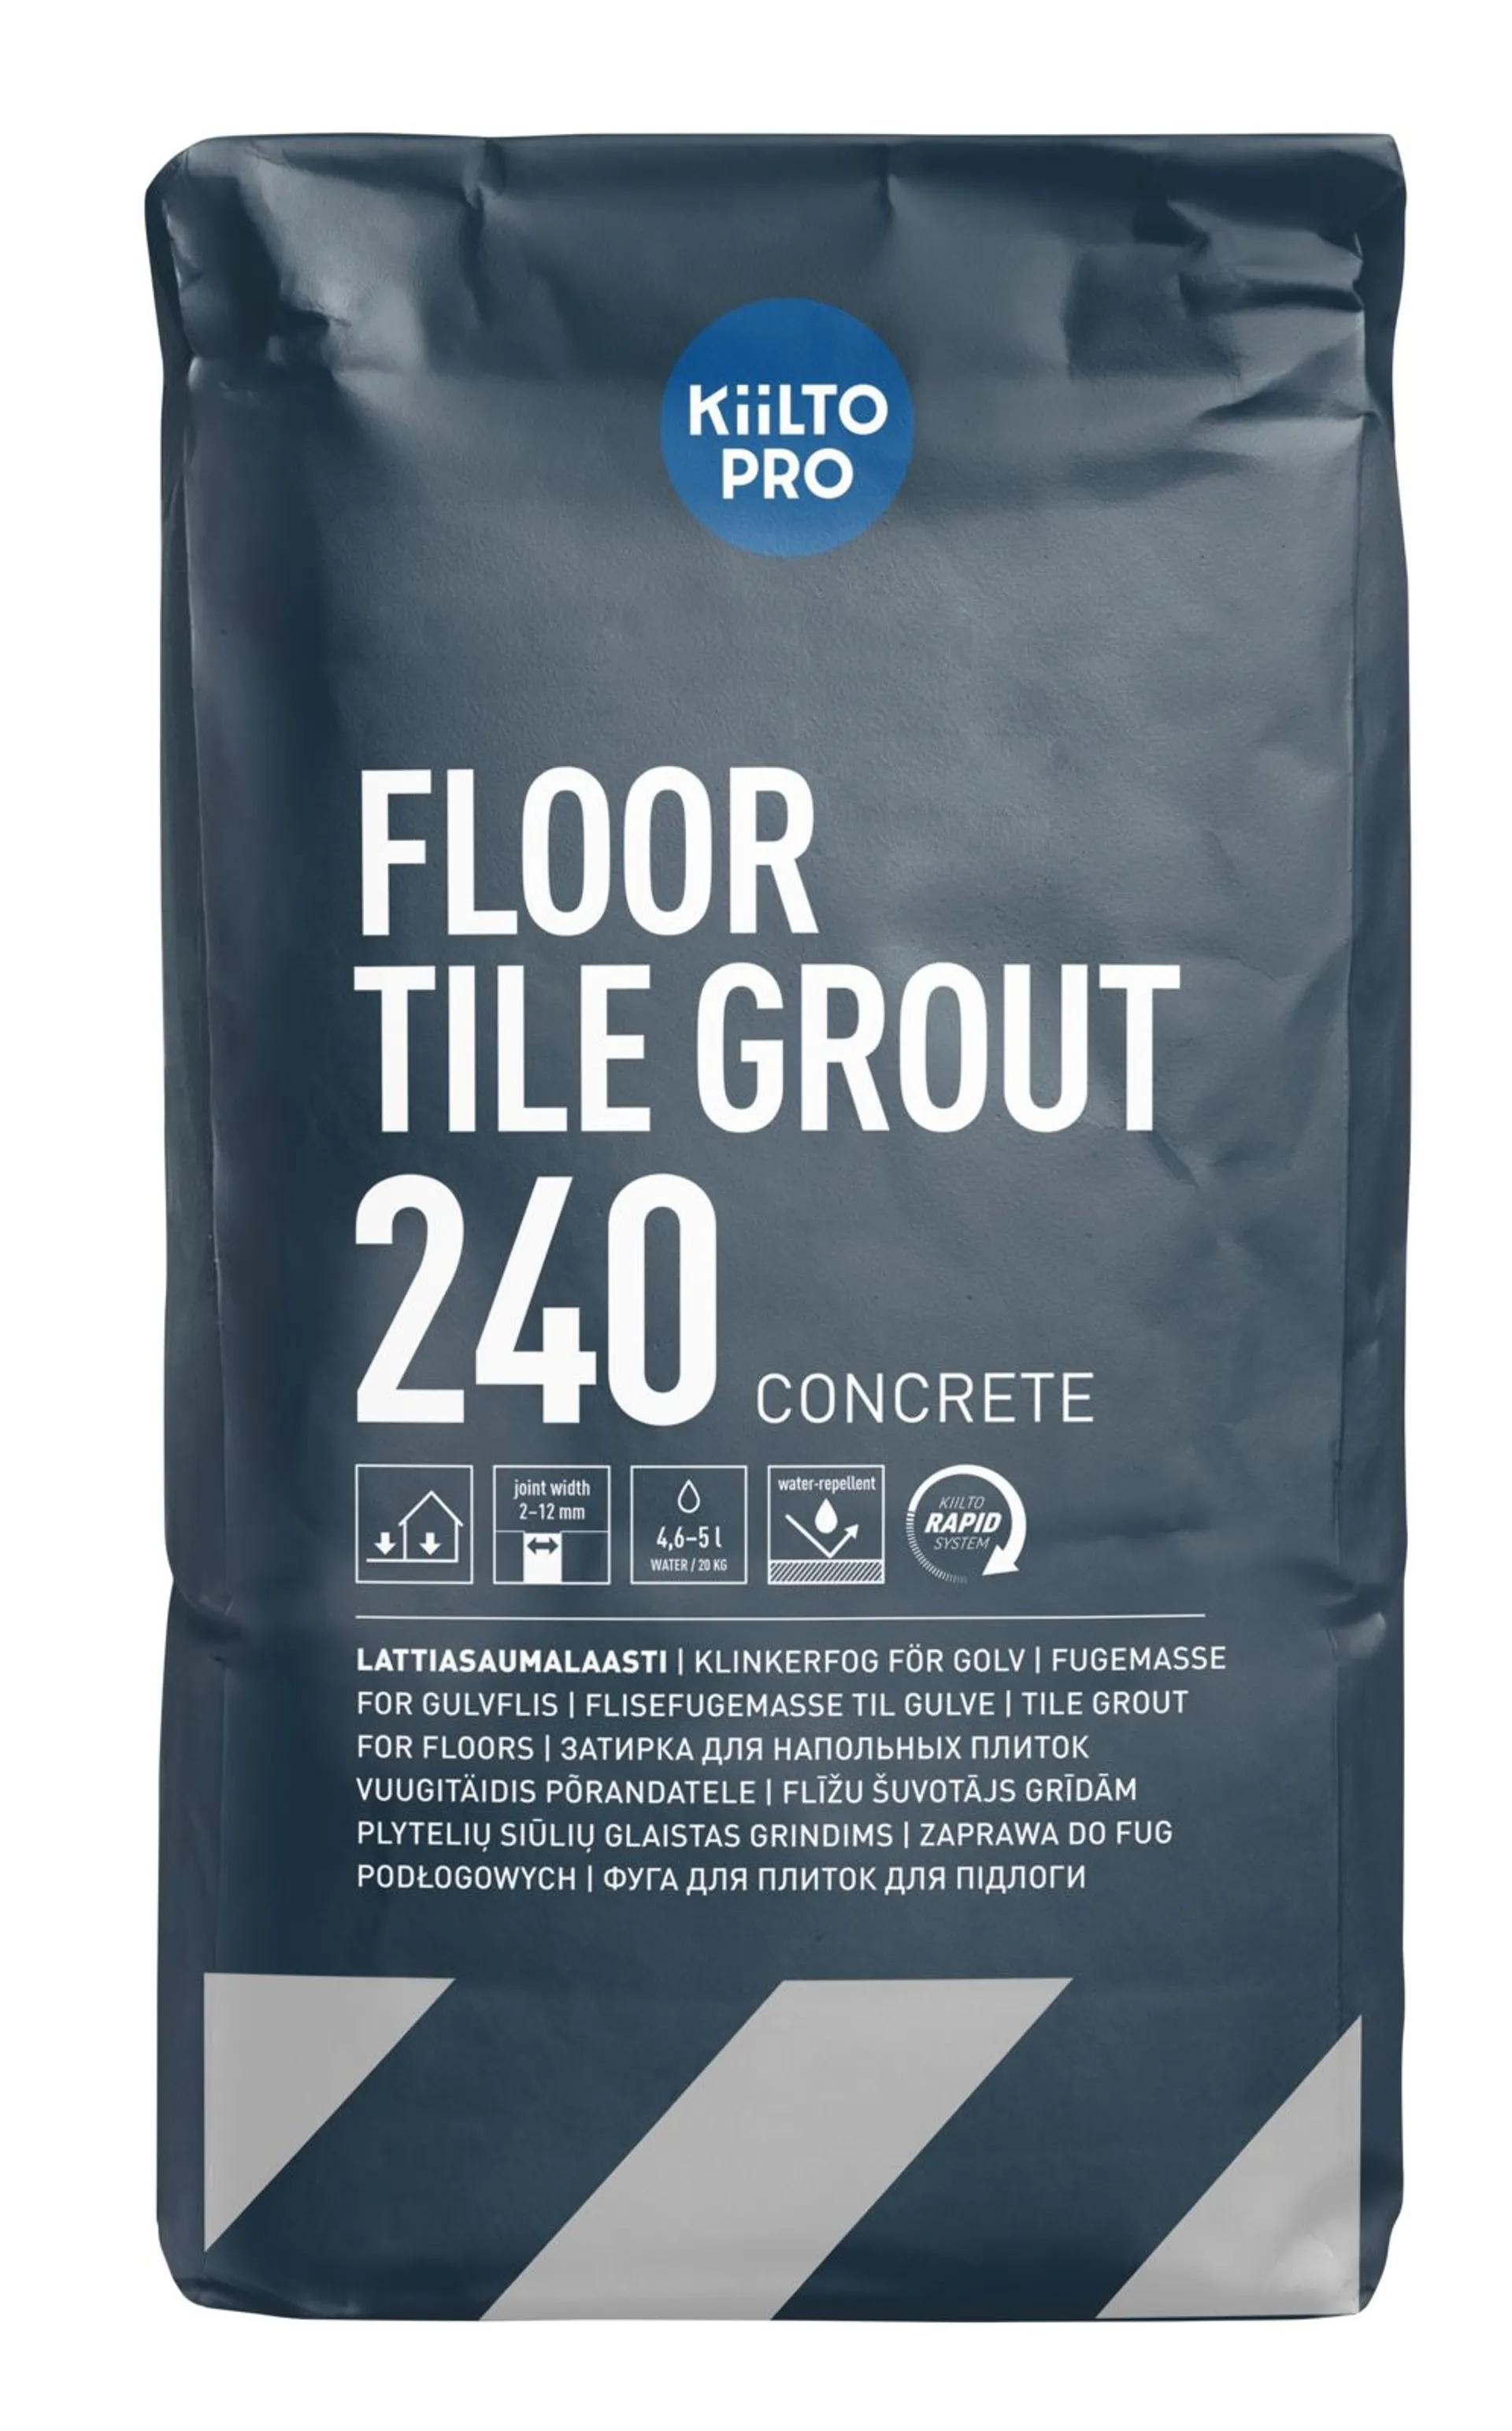 Kiilto Pro Floor Tile grout lattiasaumalaasti 240 concrete 20 kg